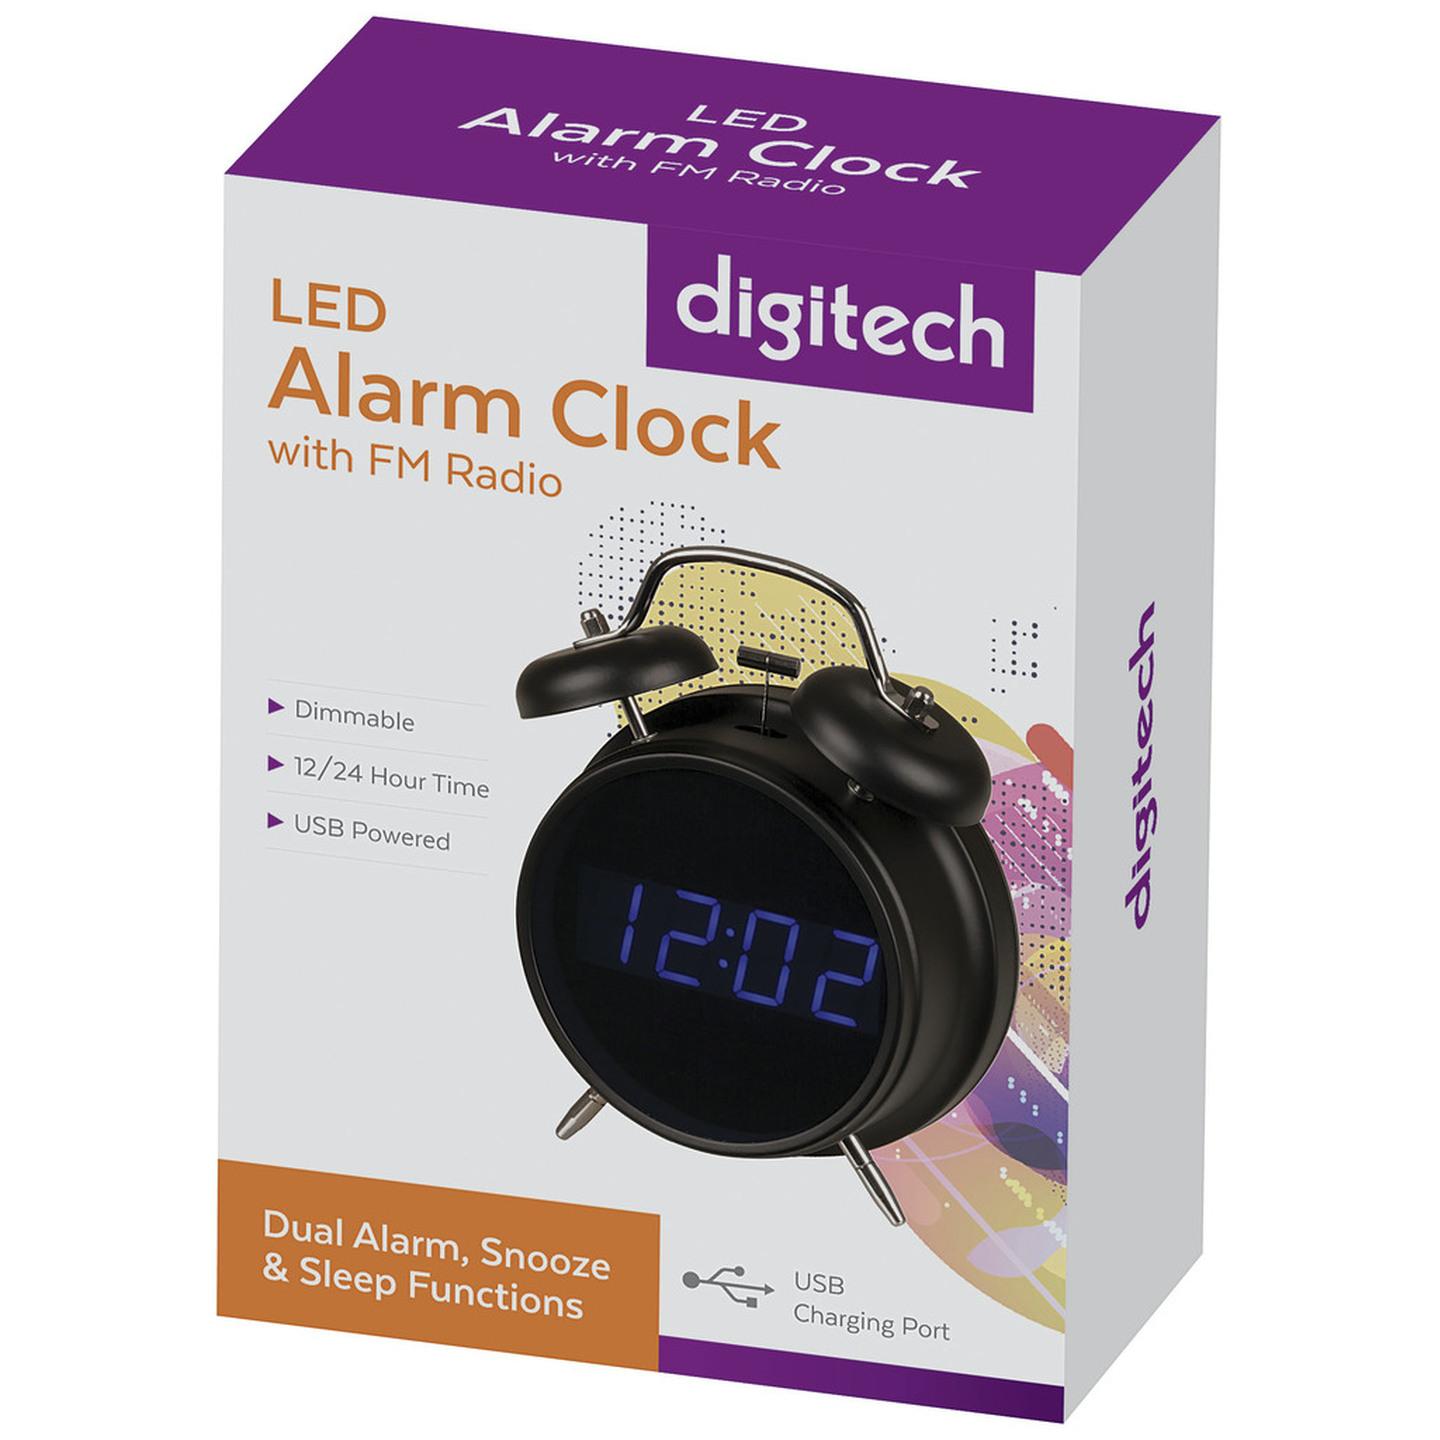 LED Alarm Clock with FM Radio